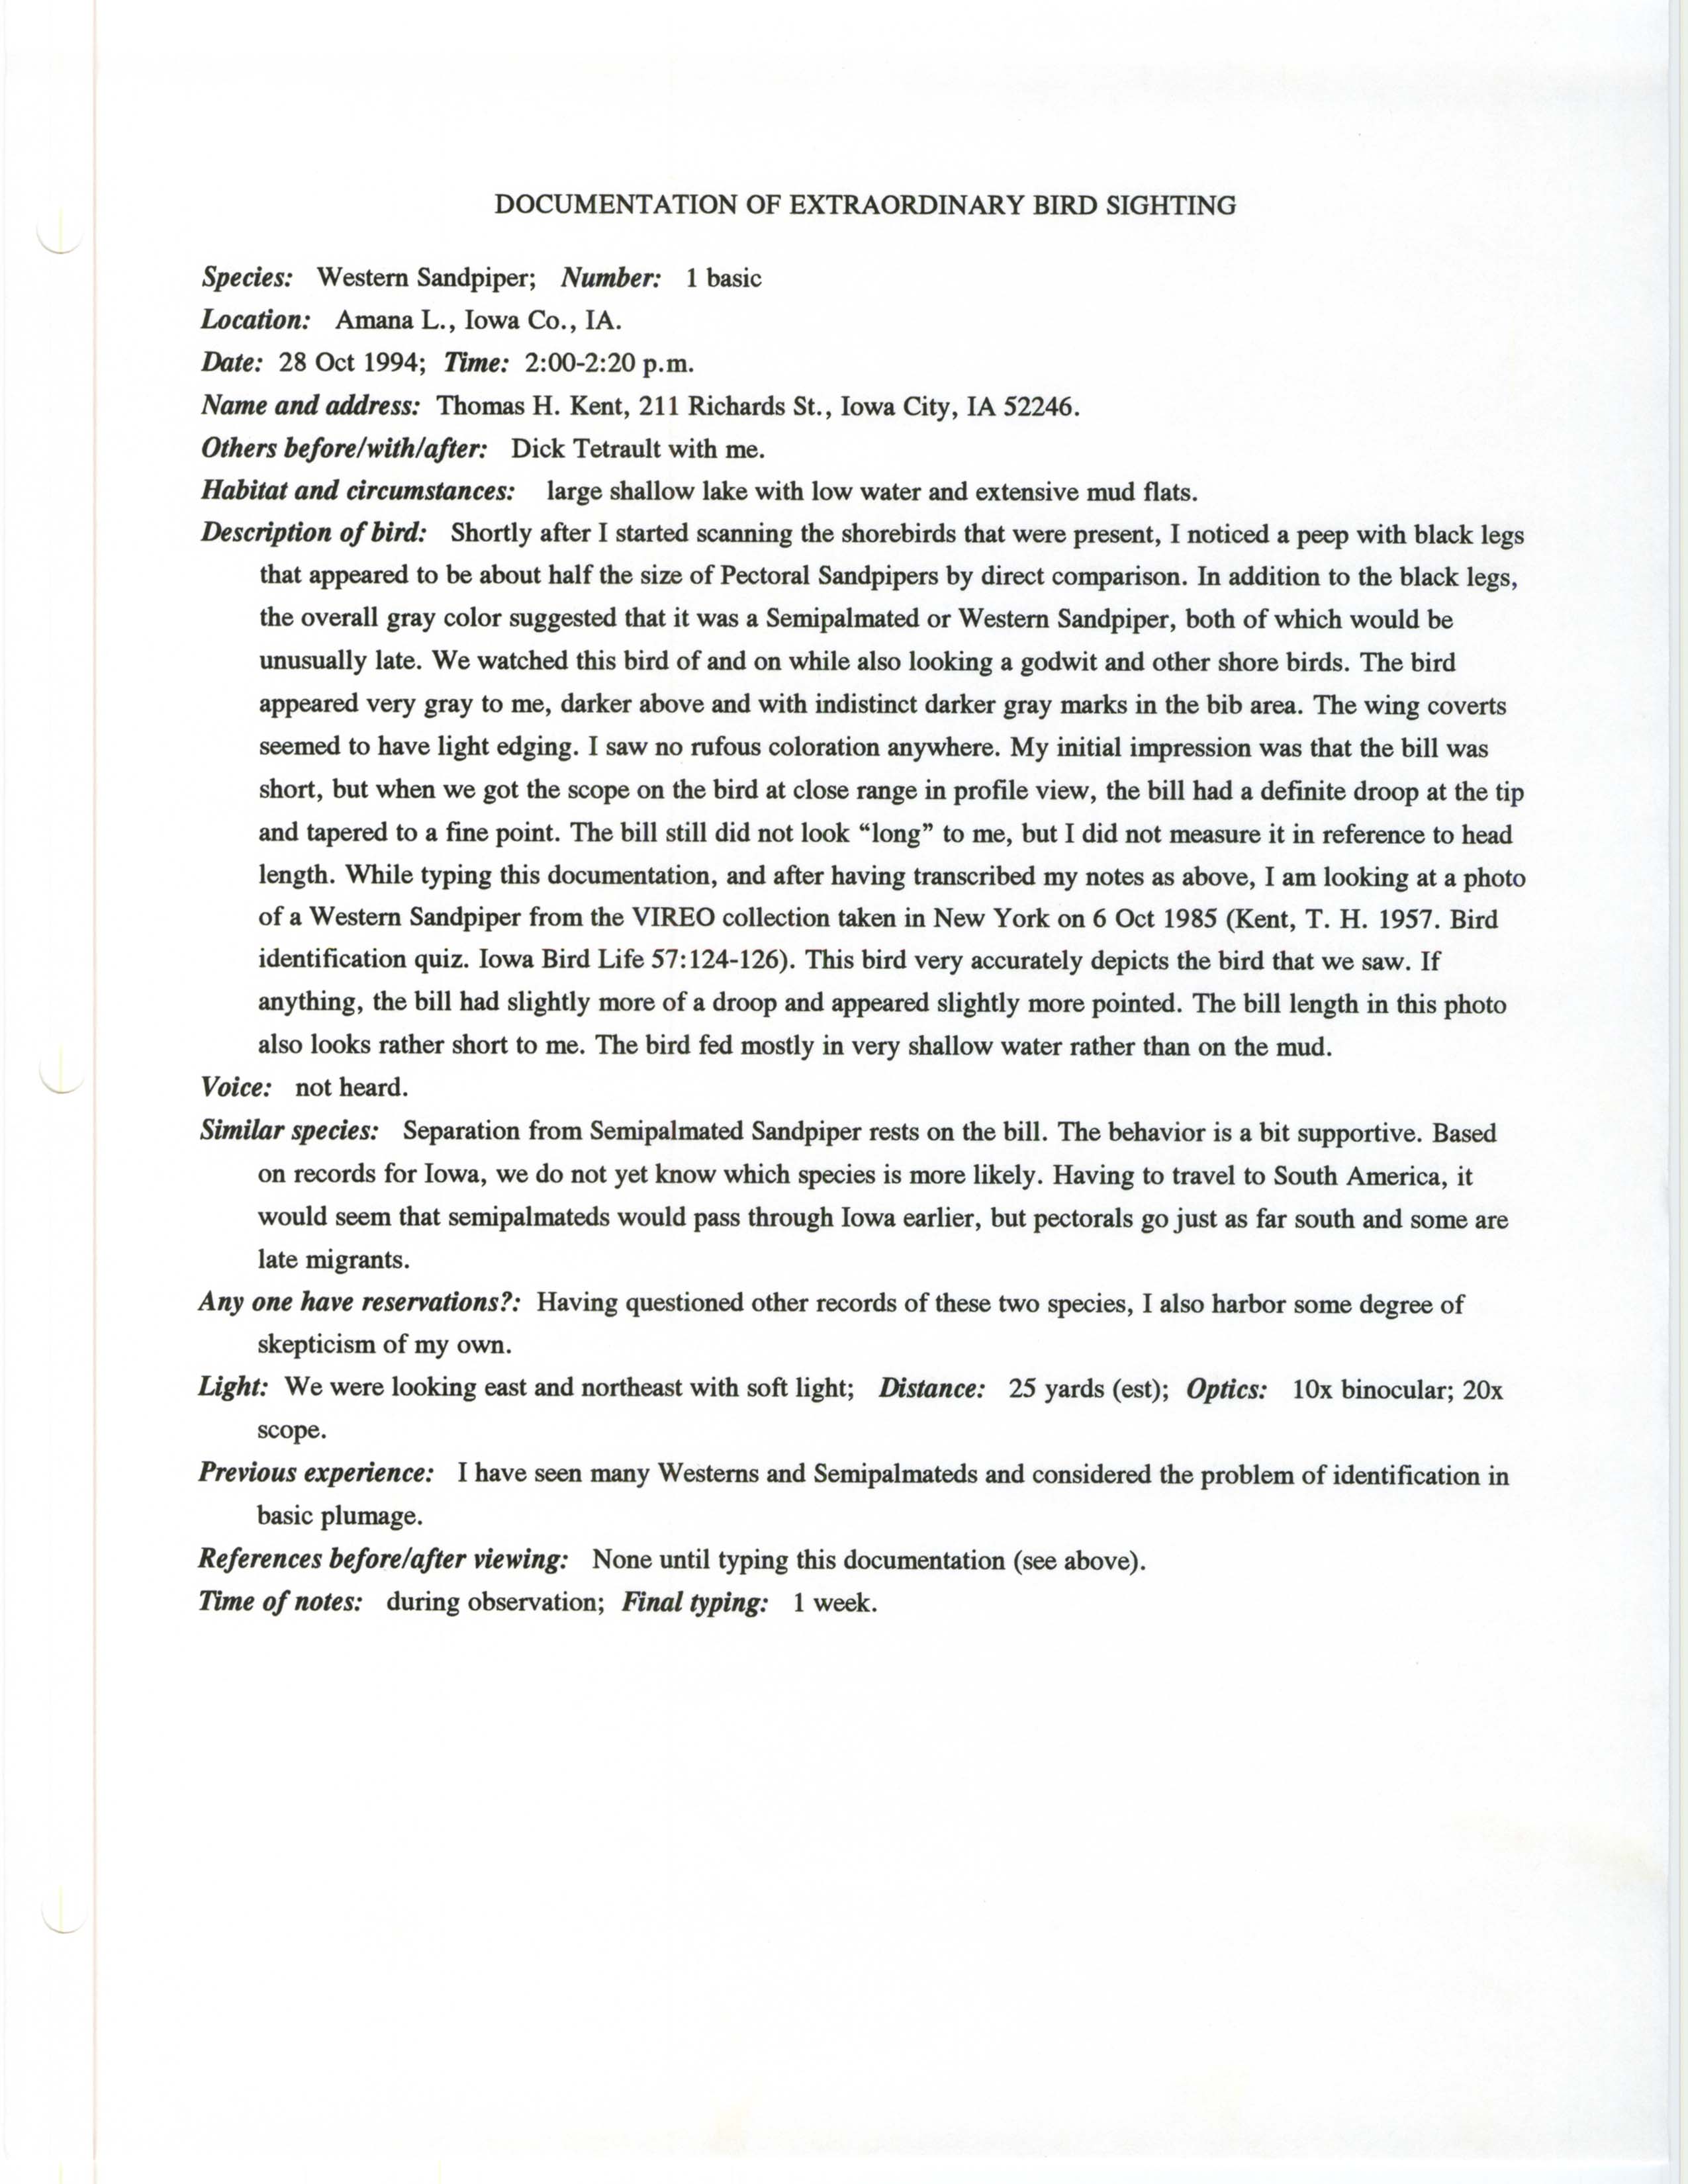 Rare bird documentation form for Western Sandpiper at Amana Lake, 1994